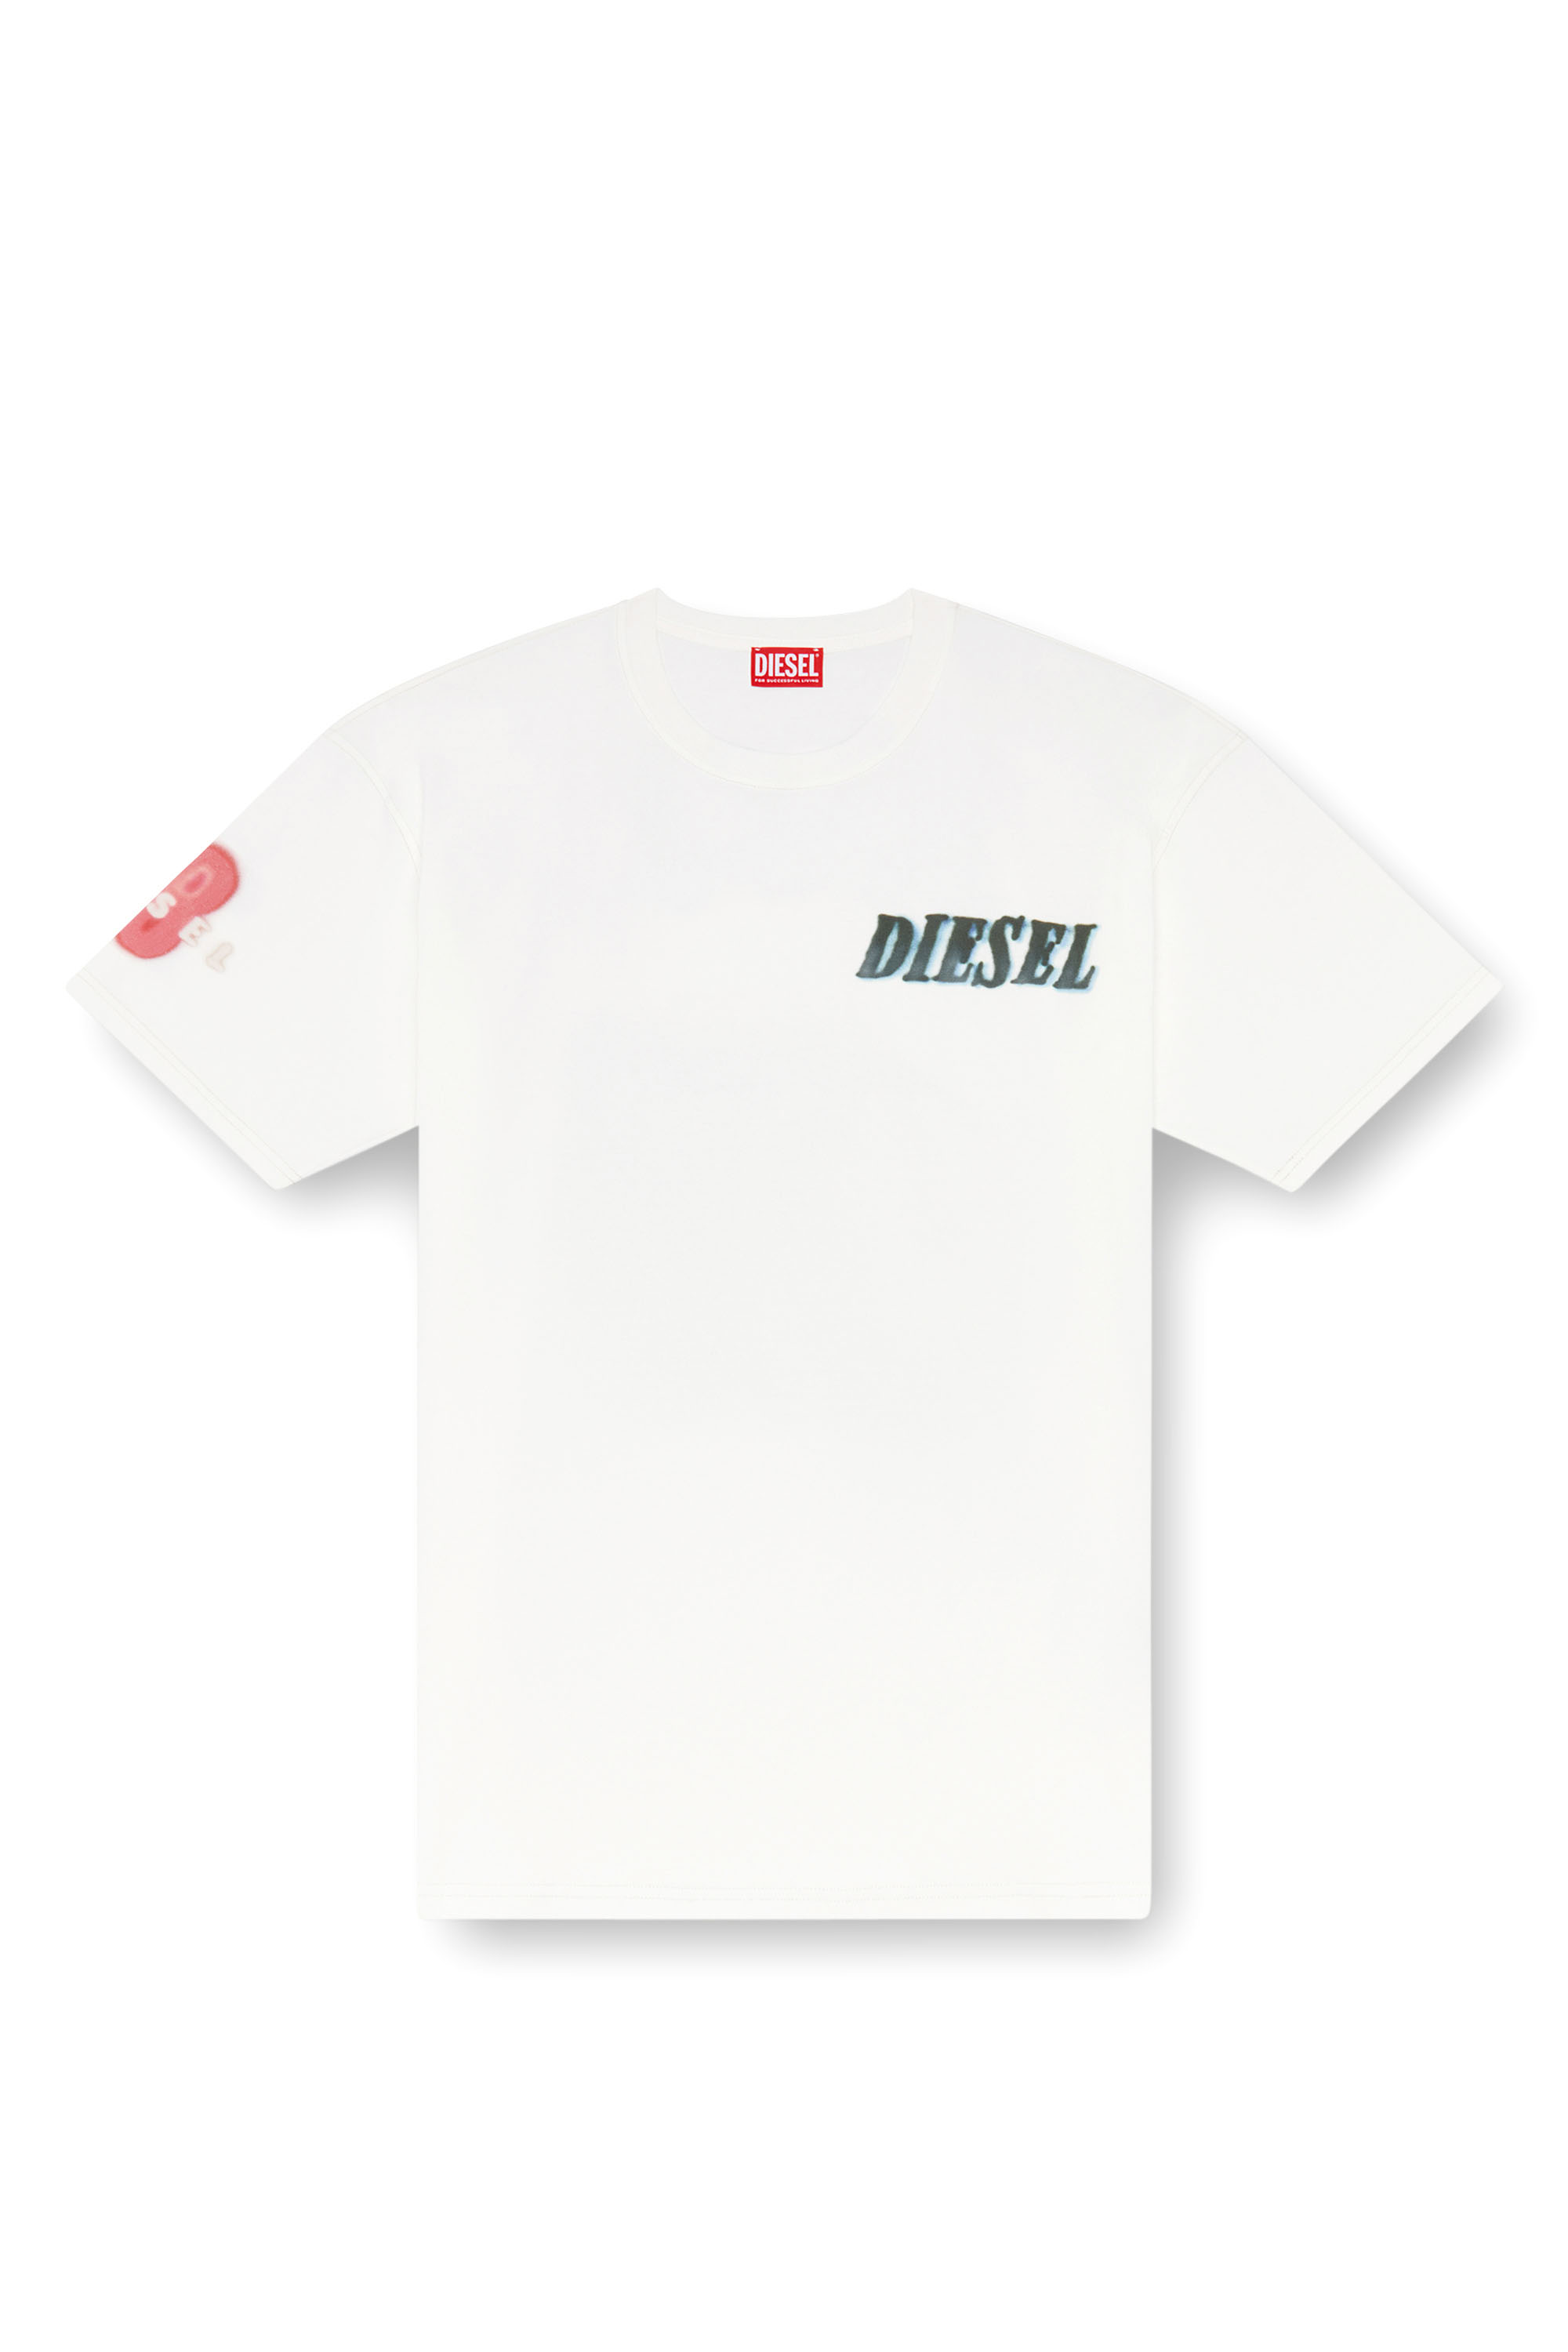 Diesel - T-BOXT-Q19, Uomo T-shirt con stampa logo e gomma in Bianco - Image 3